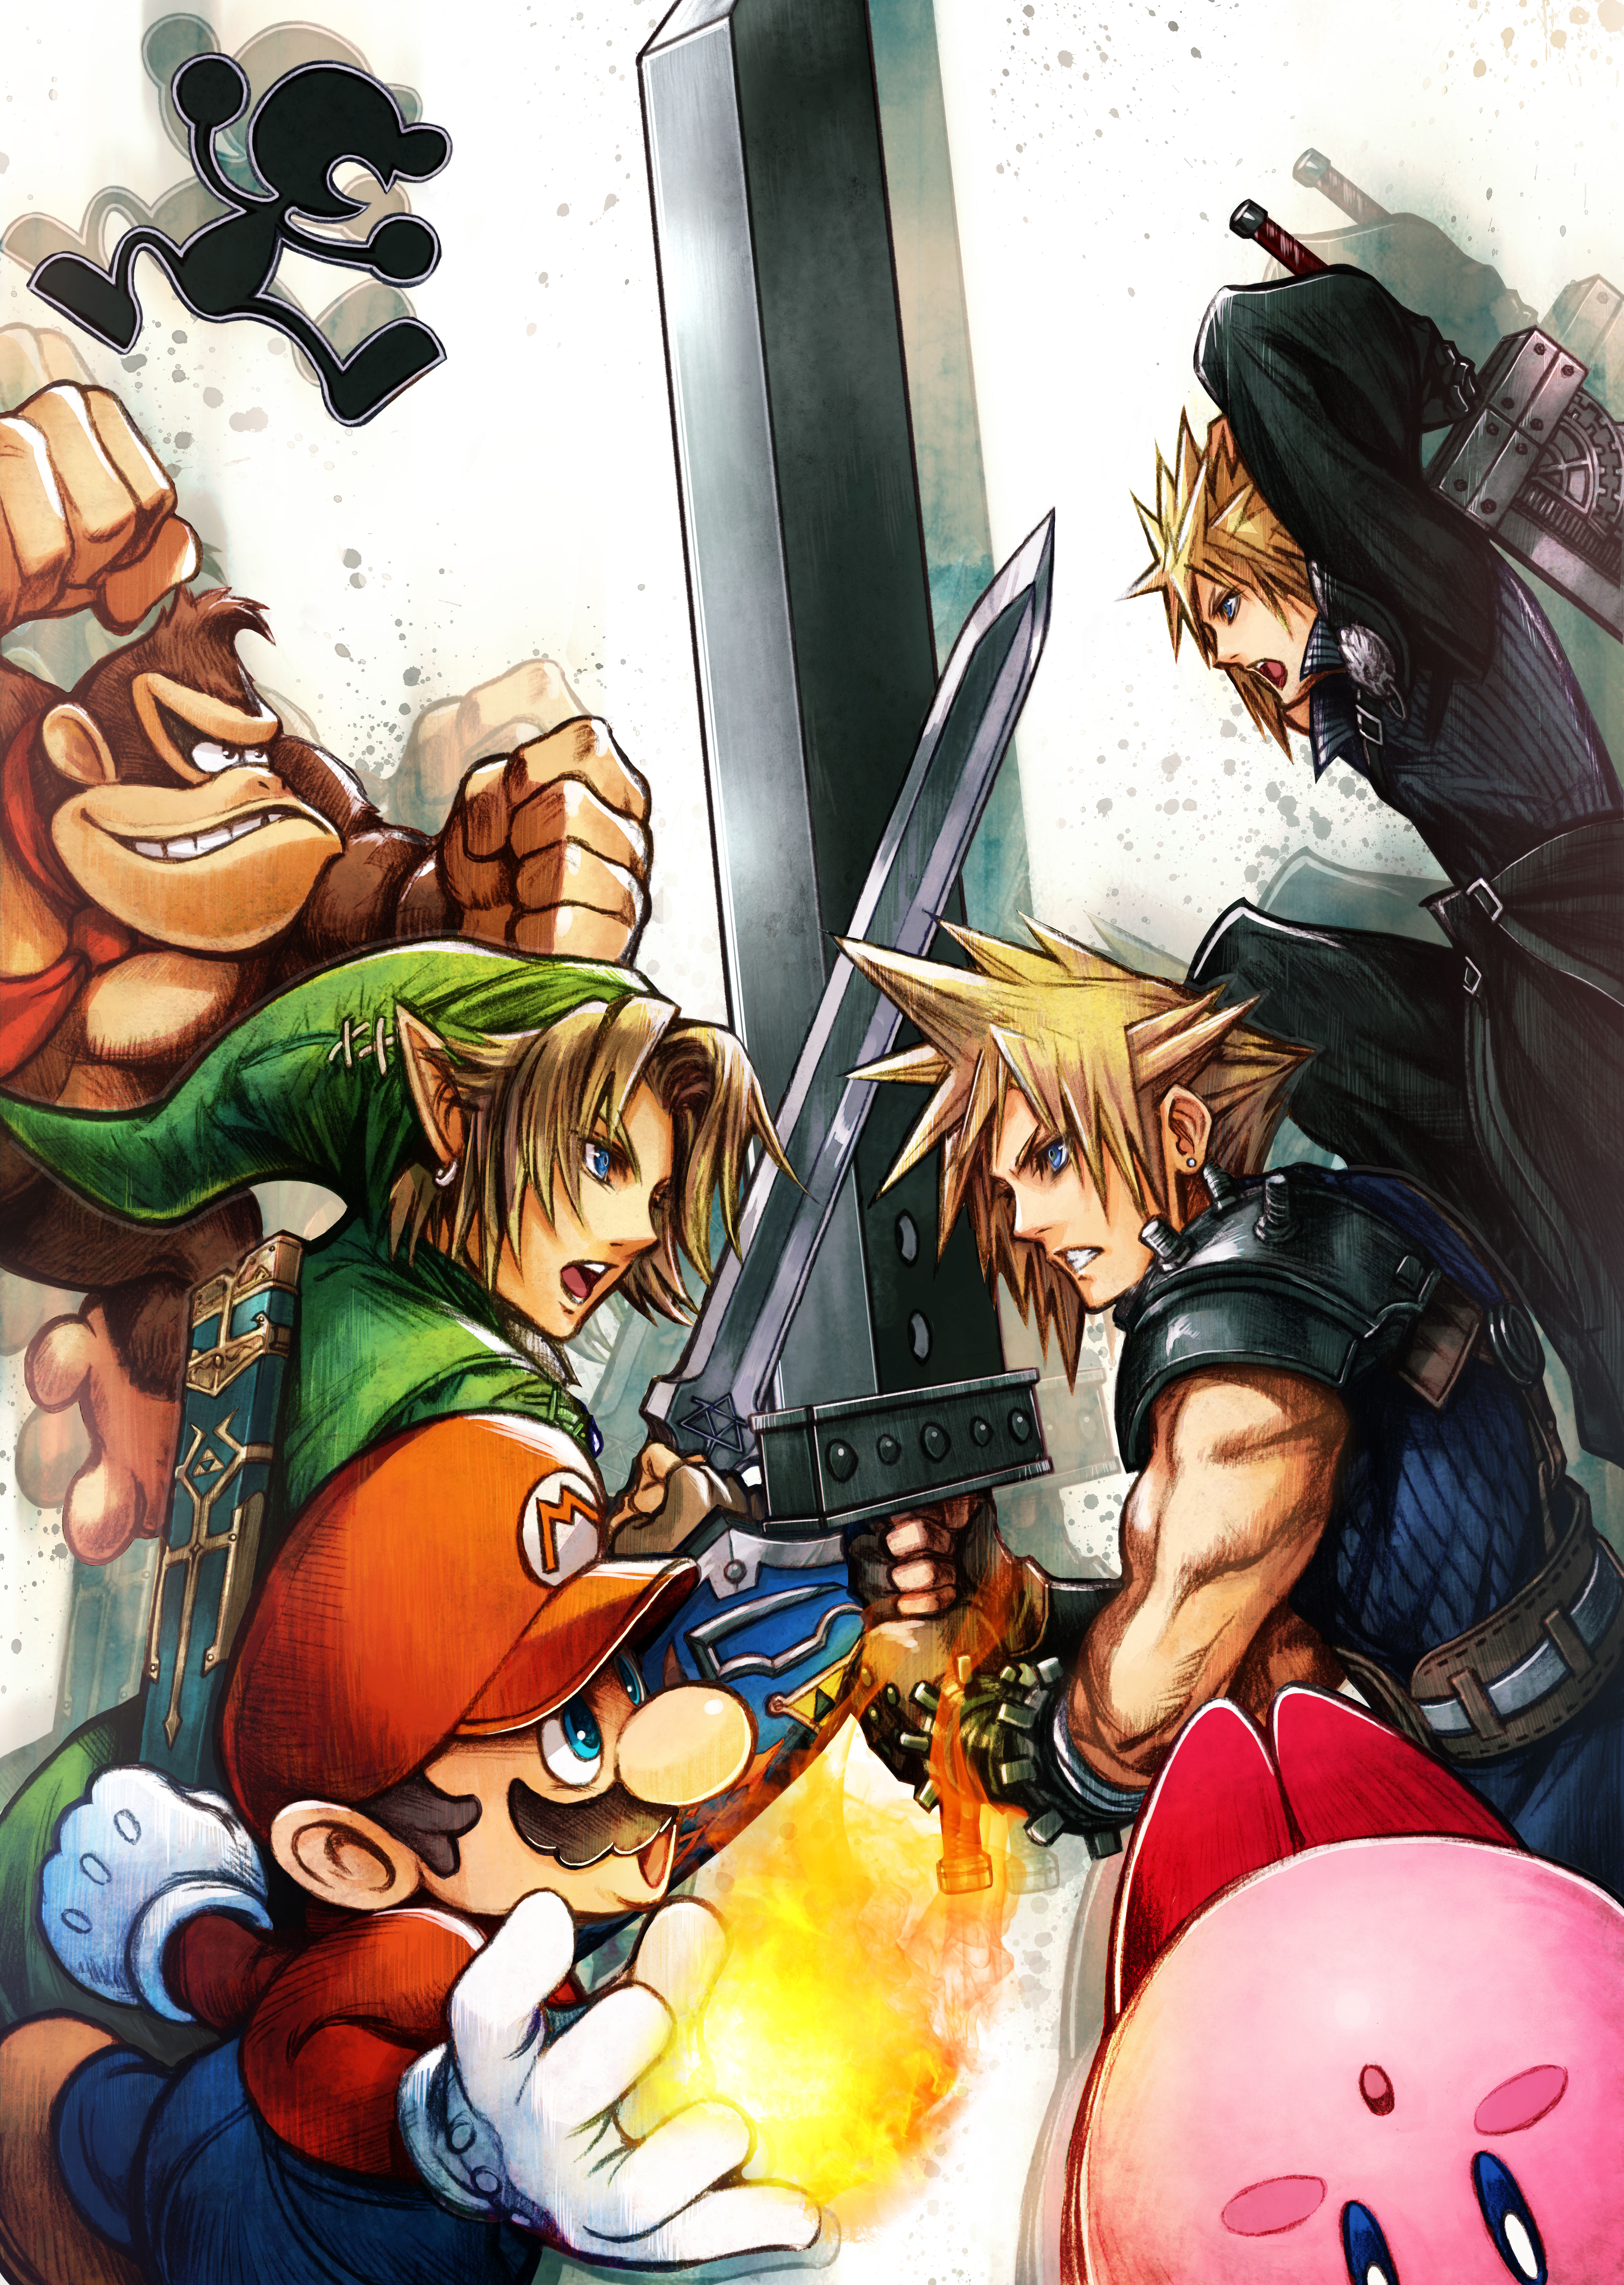 Super Smash Bros. for Nintendo 3DS and Wii U Art by Tetsuya Nomura